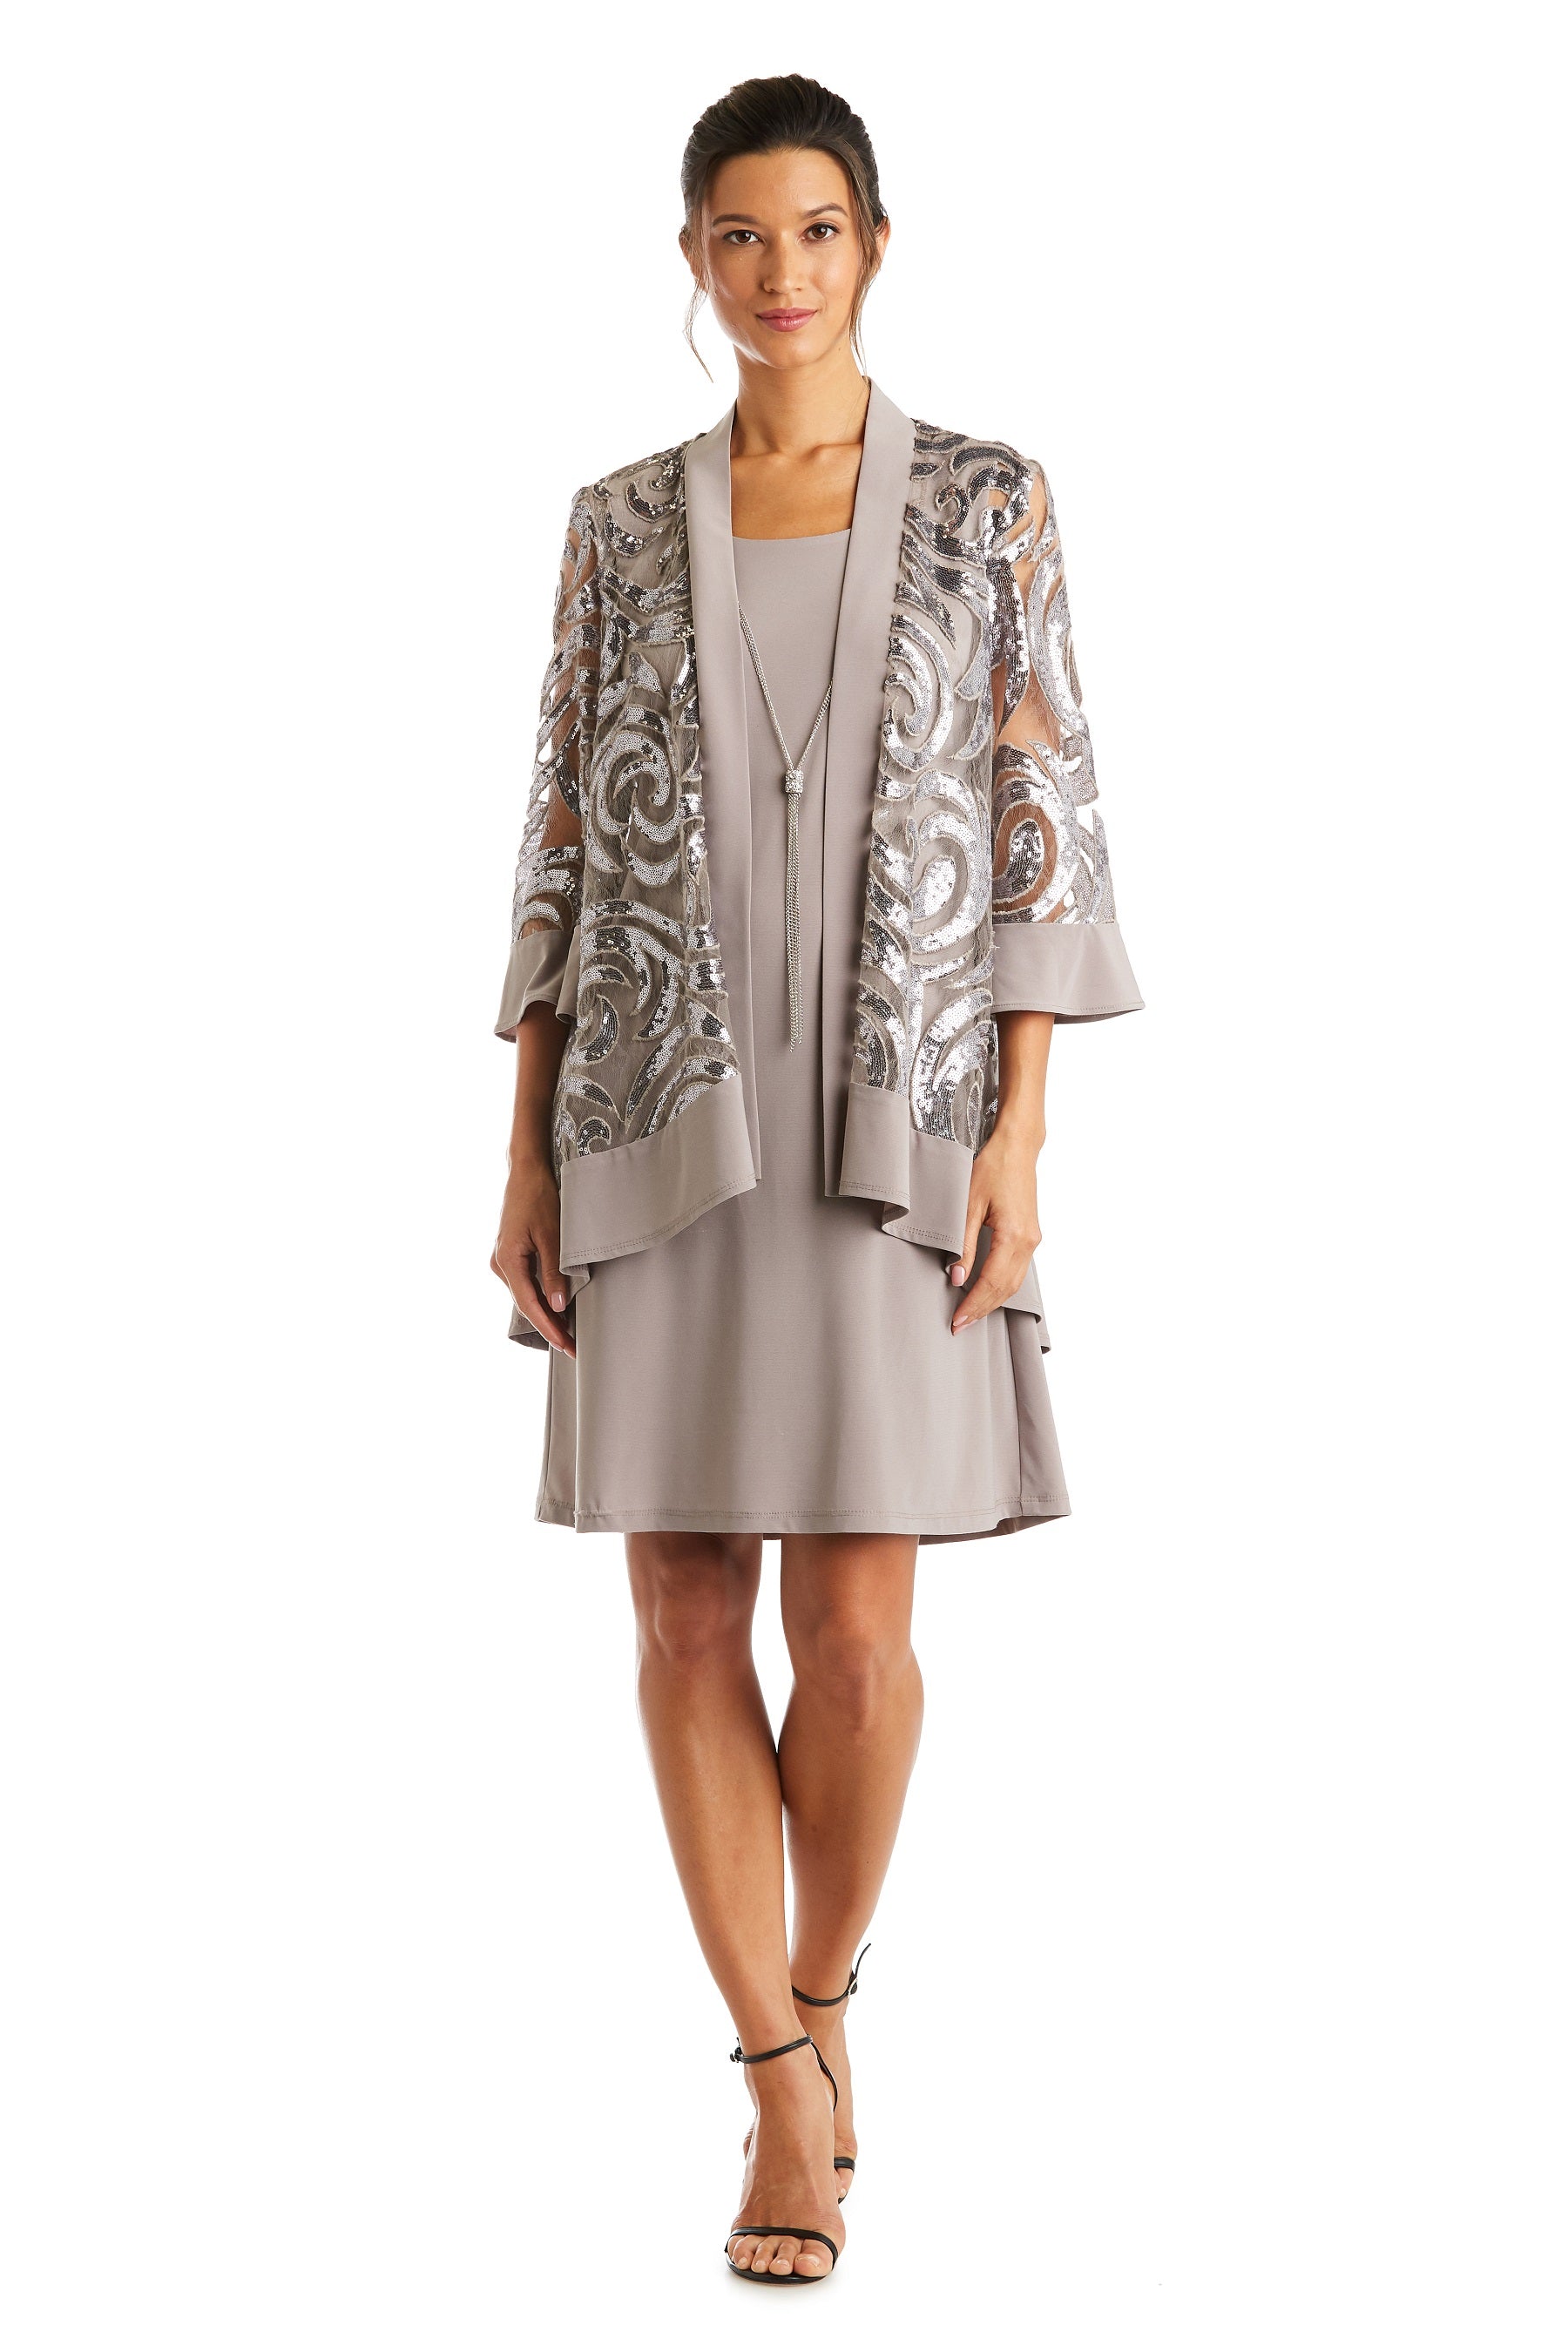 Itrh Paris Jacket Dress | Silver, Crystal, Net, Lapel Collar, Full